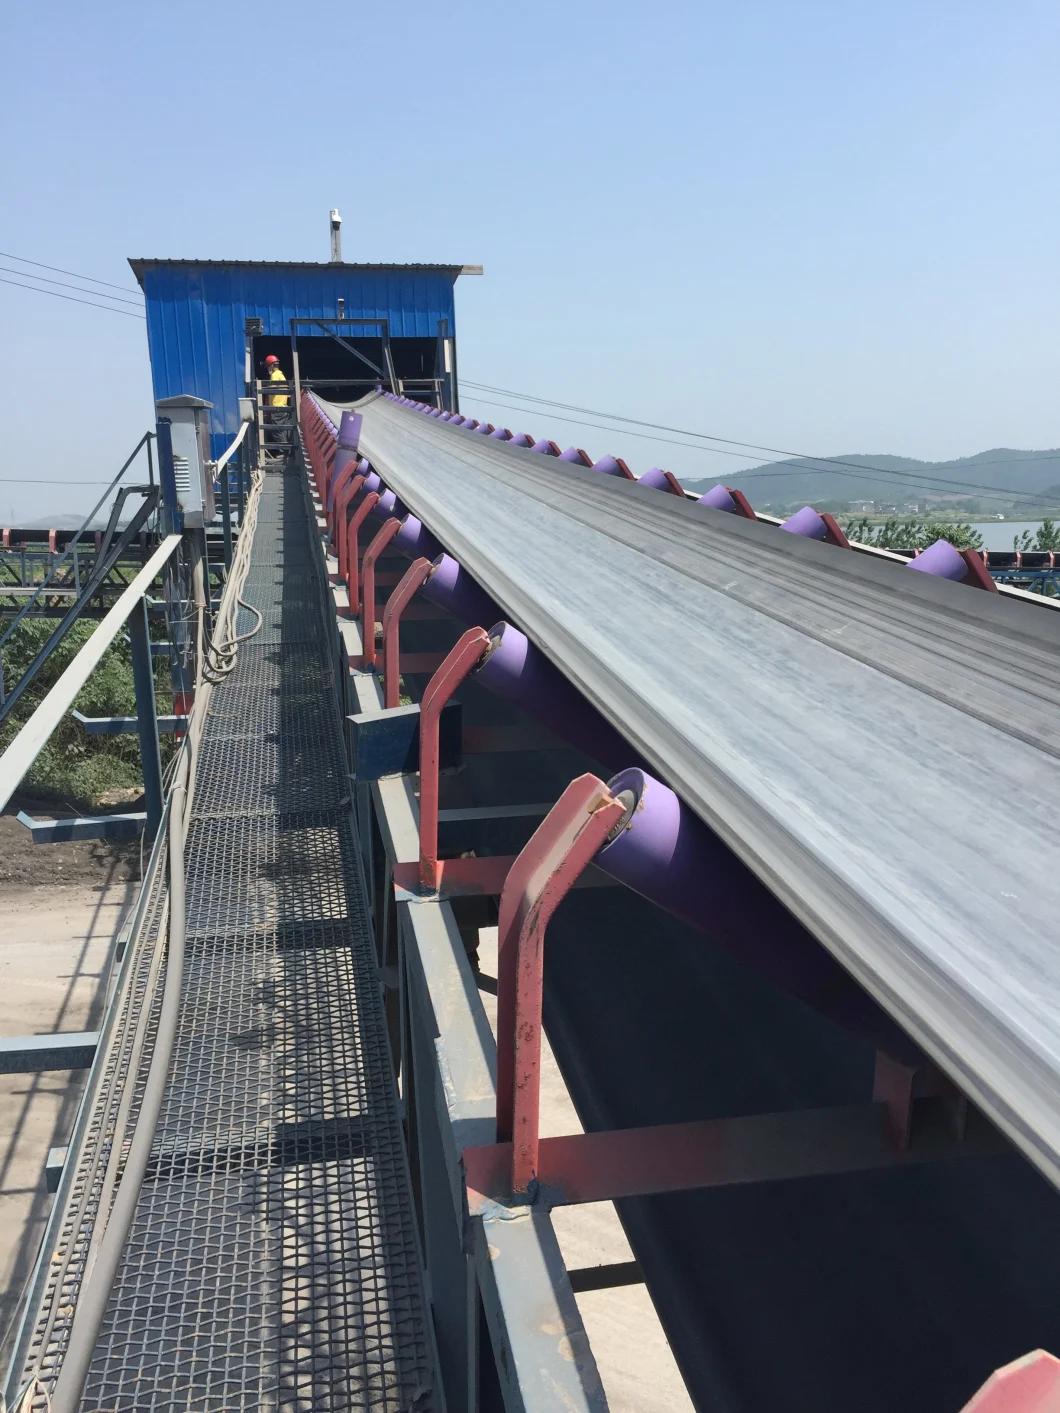 Dustproof Large Stone Fixed Belt Conveyor for Coal Mining